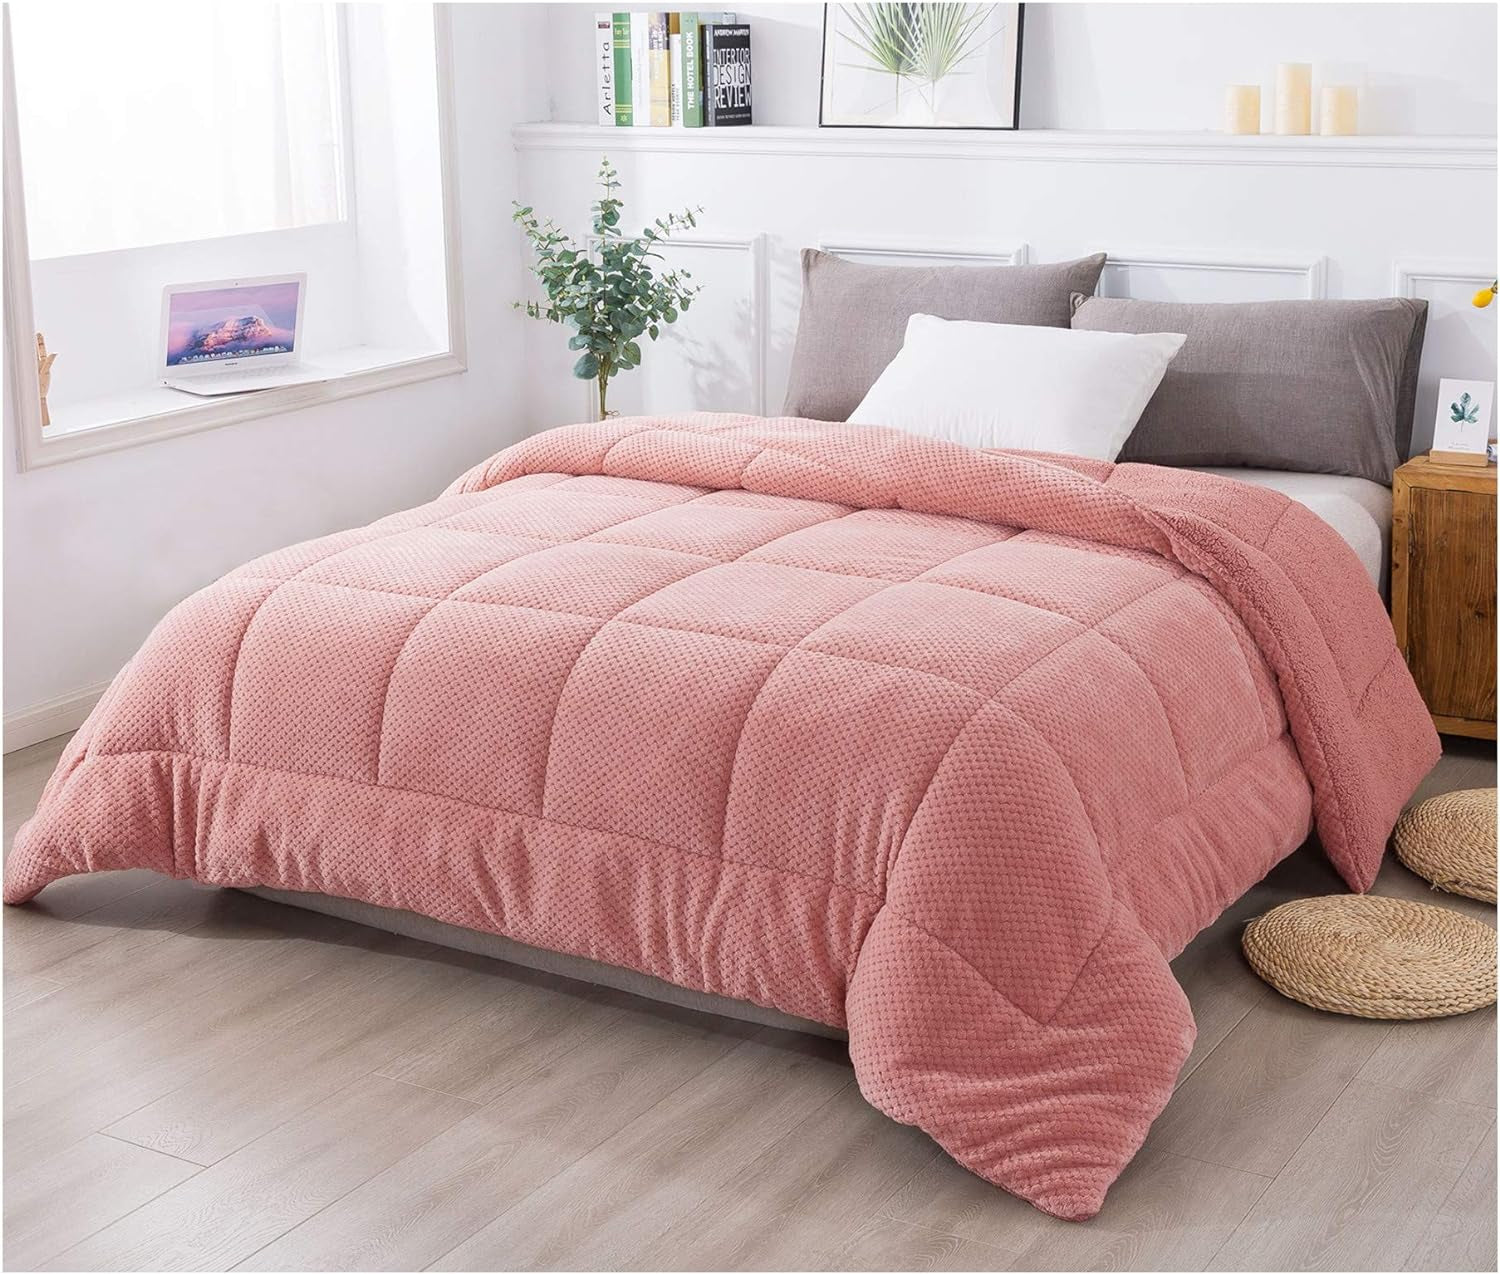 Luxury Plush Sherpa Comforter, Ultra Soft Cozy Reversible Fleece - Goose down Alternative Fill, Machine Washable Bedding, Sunset Rose, King Size